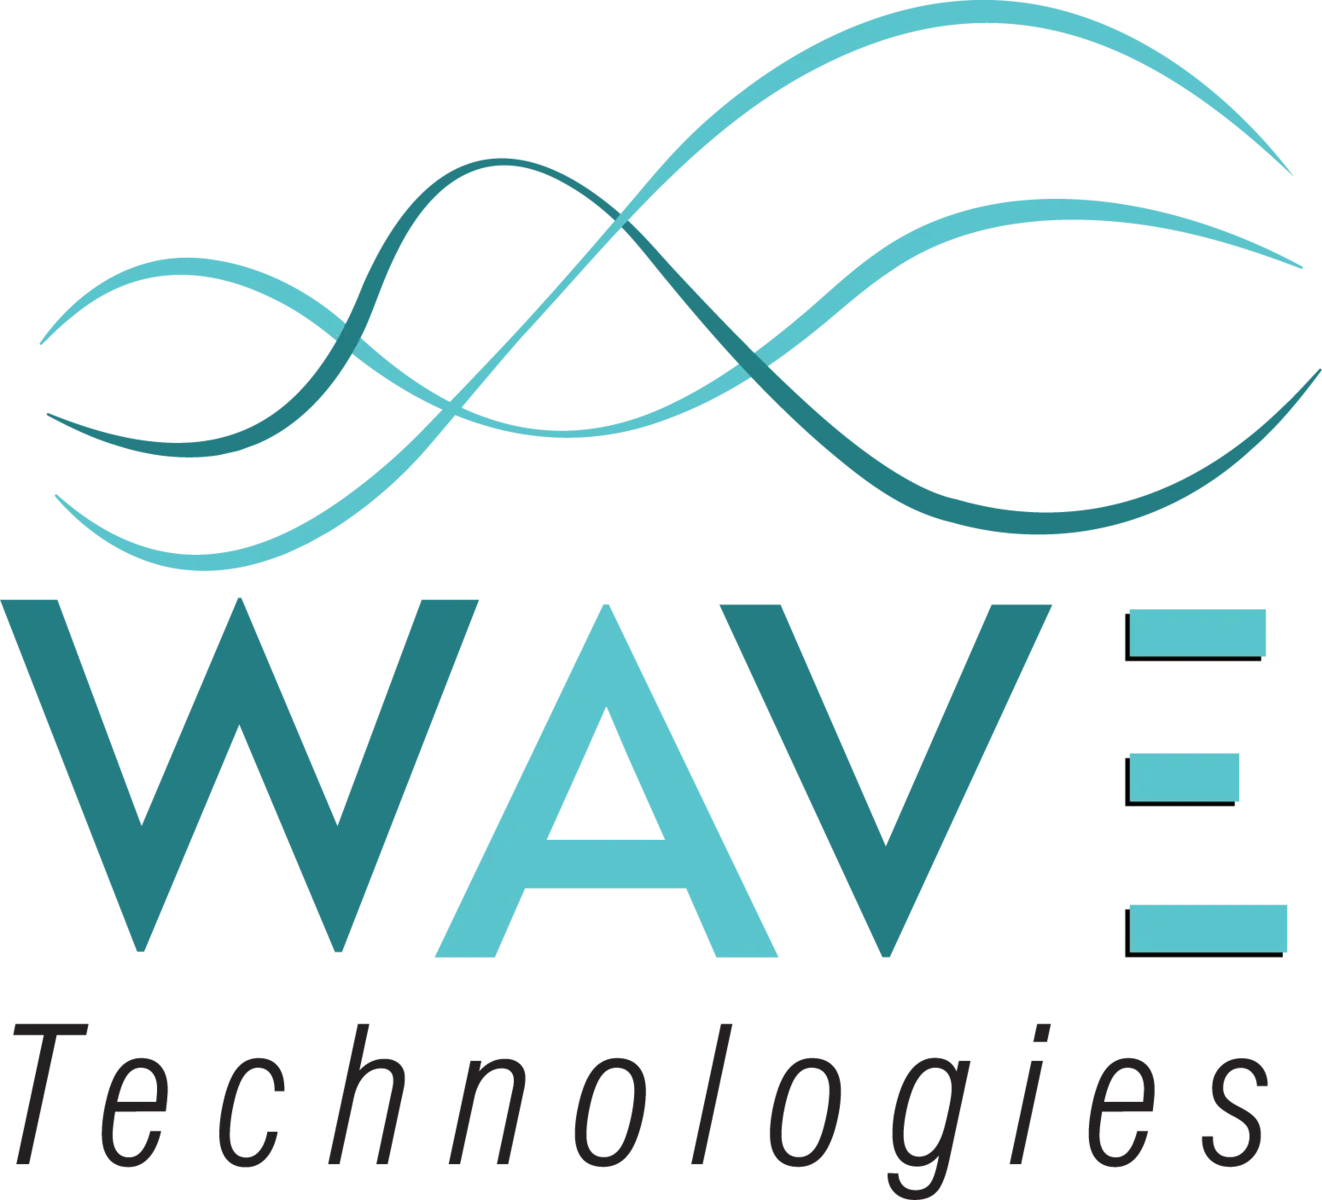 Wave Technologies